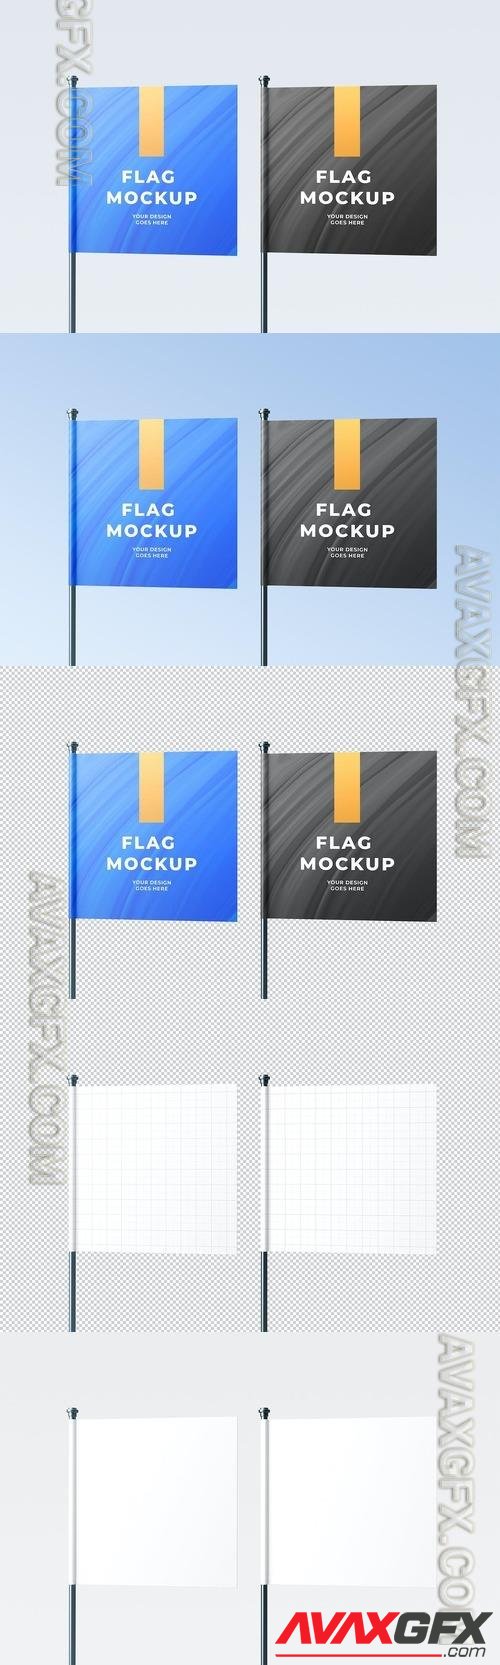 Square Flag Mockup